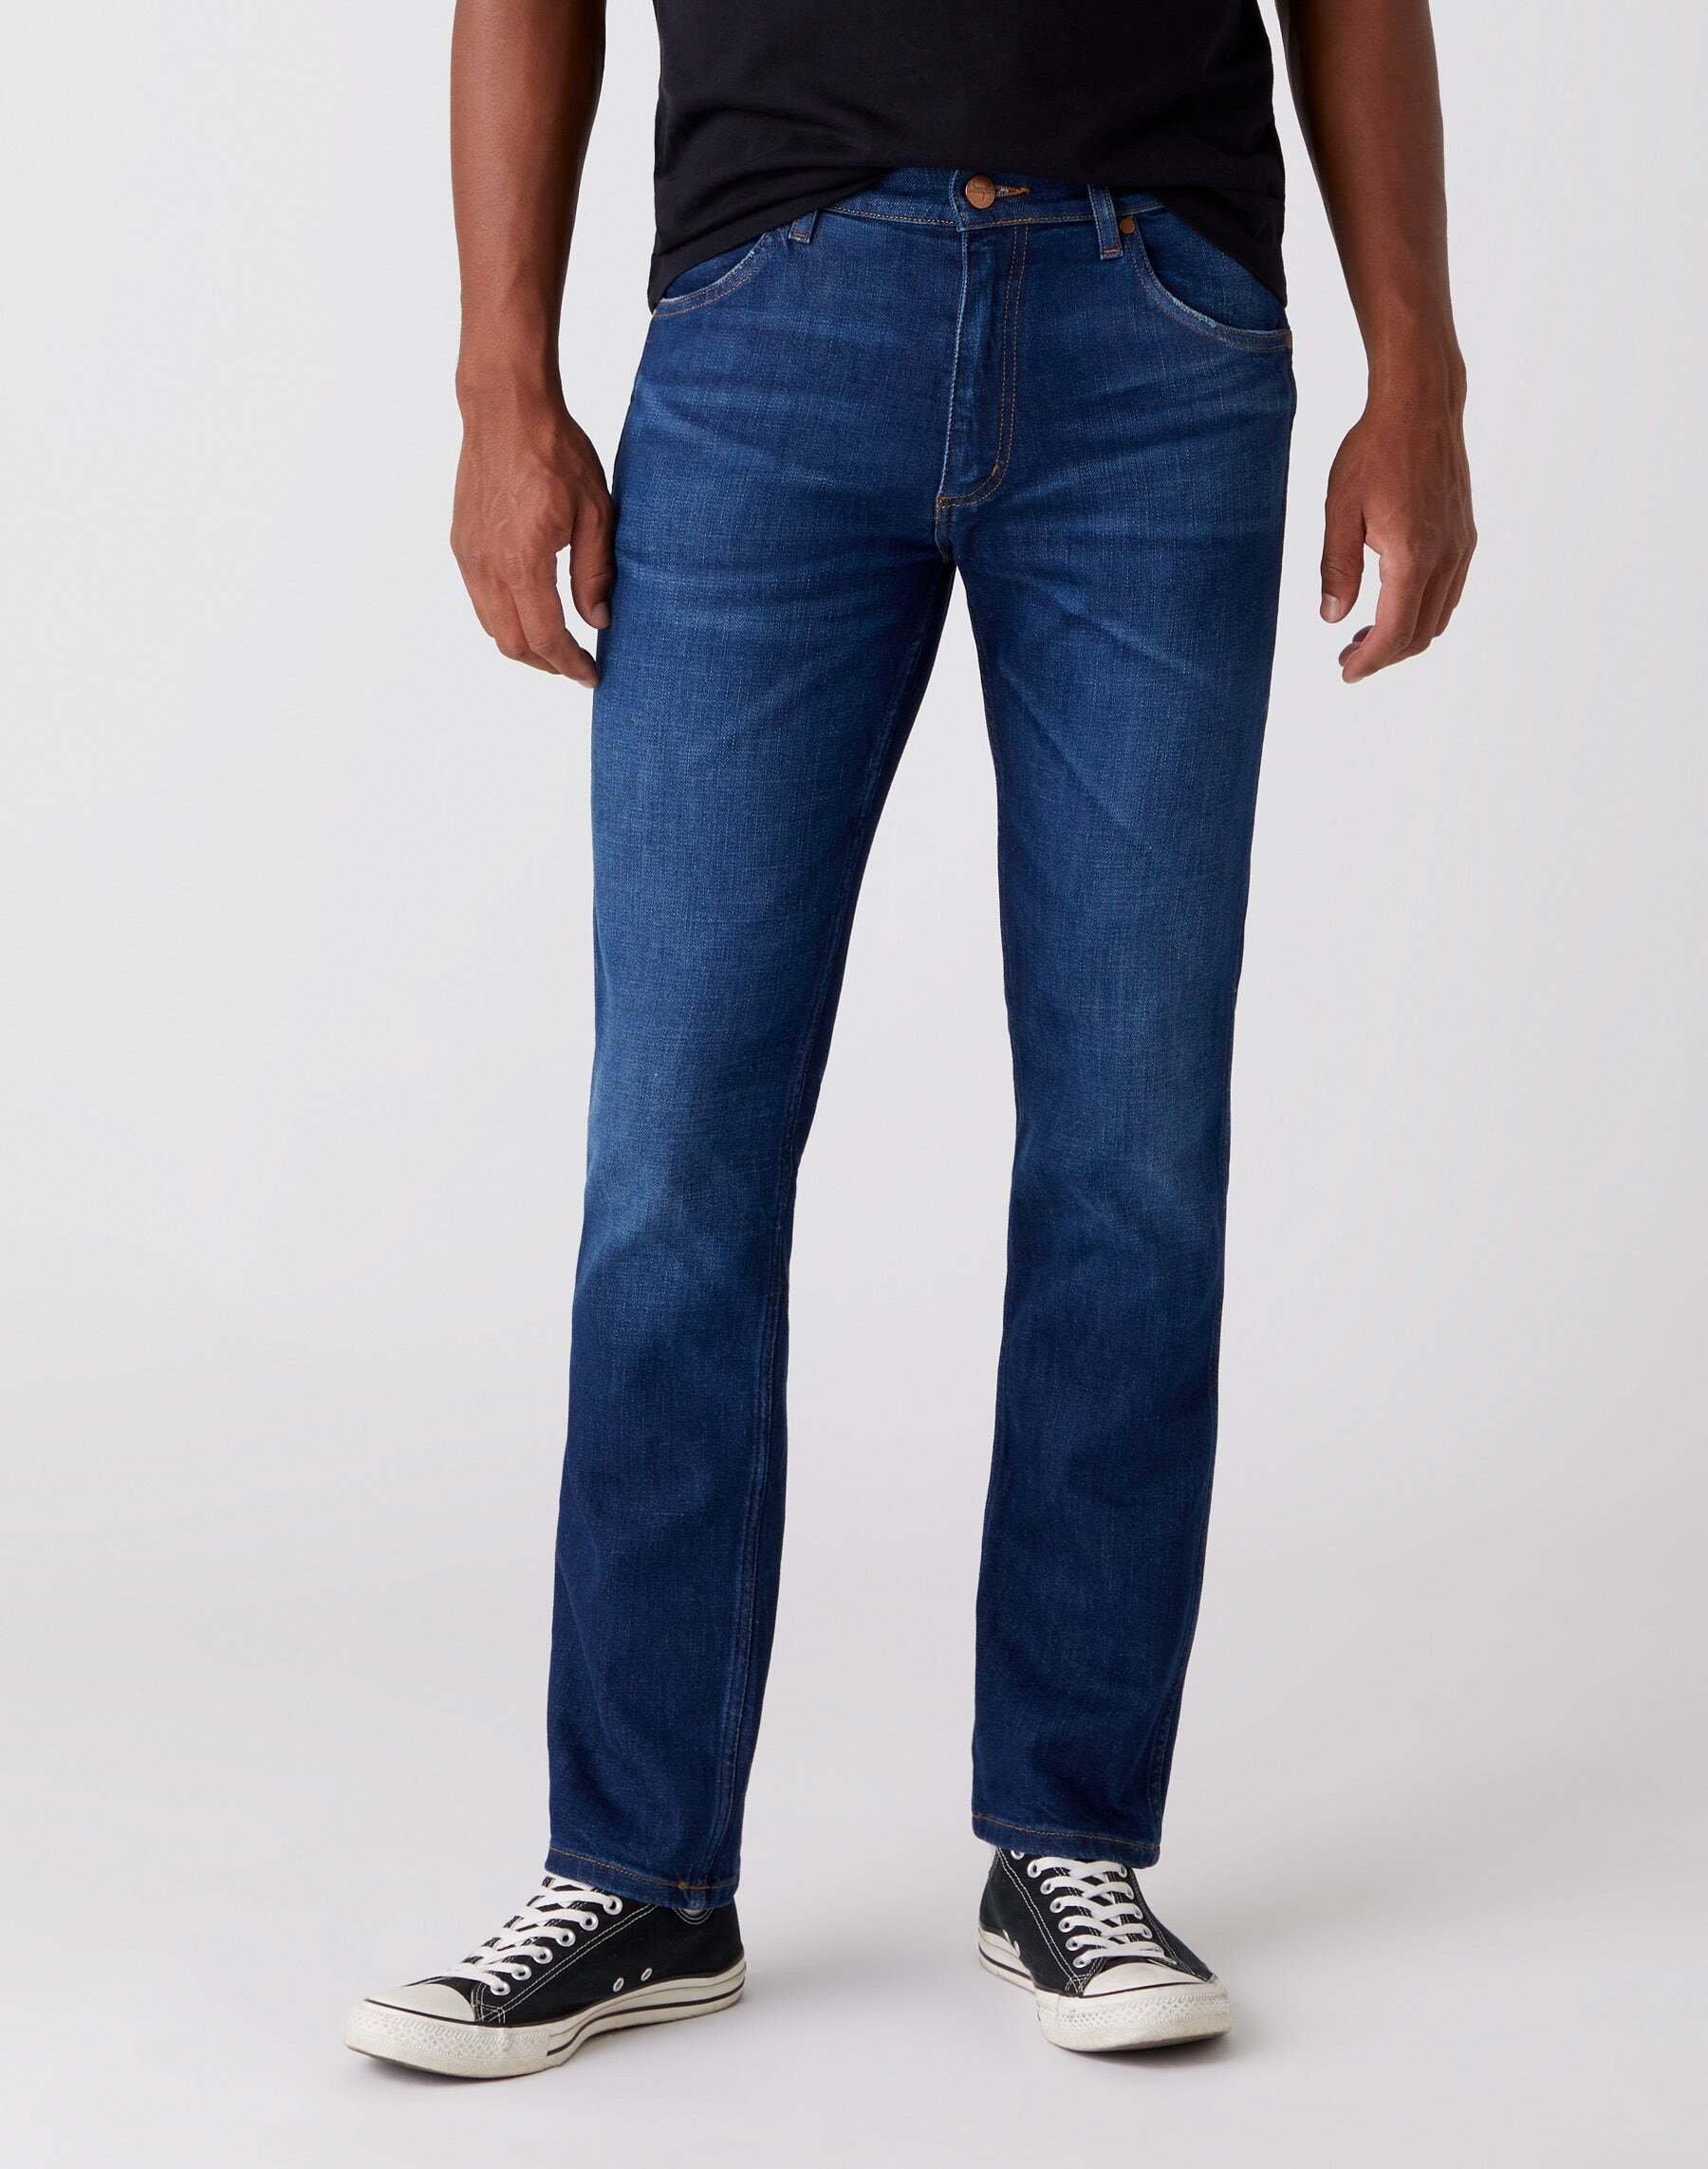 Jeans Straight Leg Greensboro Herren Blau Denim L30/W30 von Wrangler